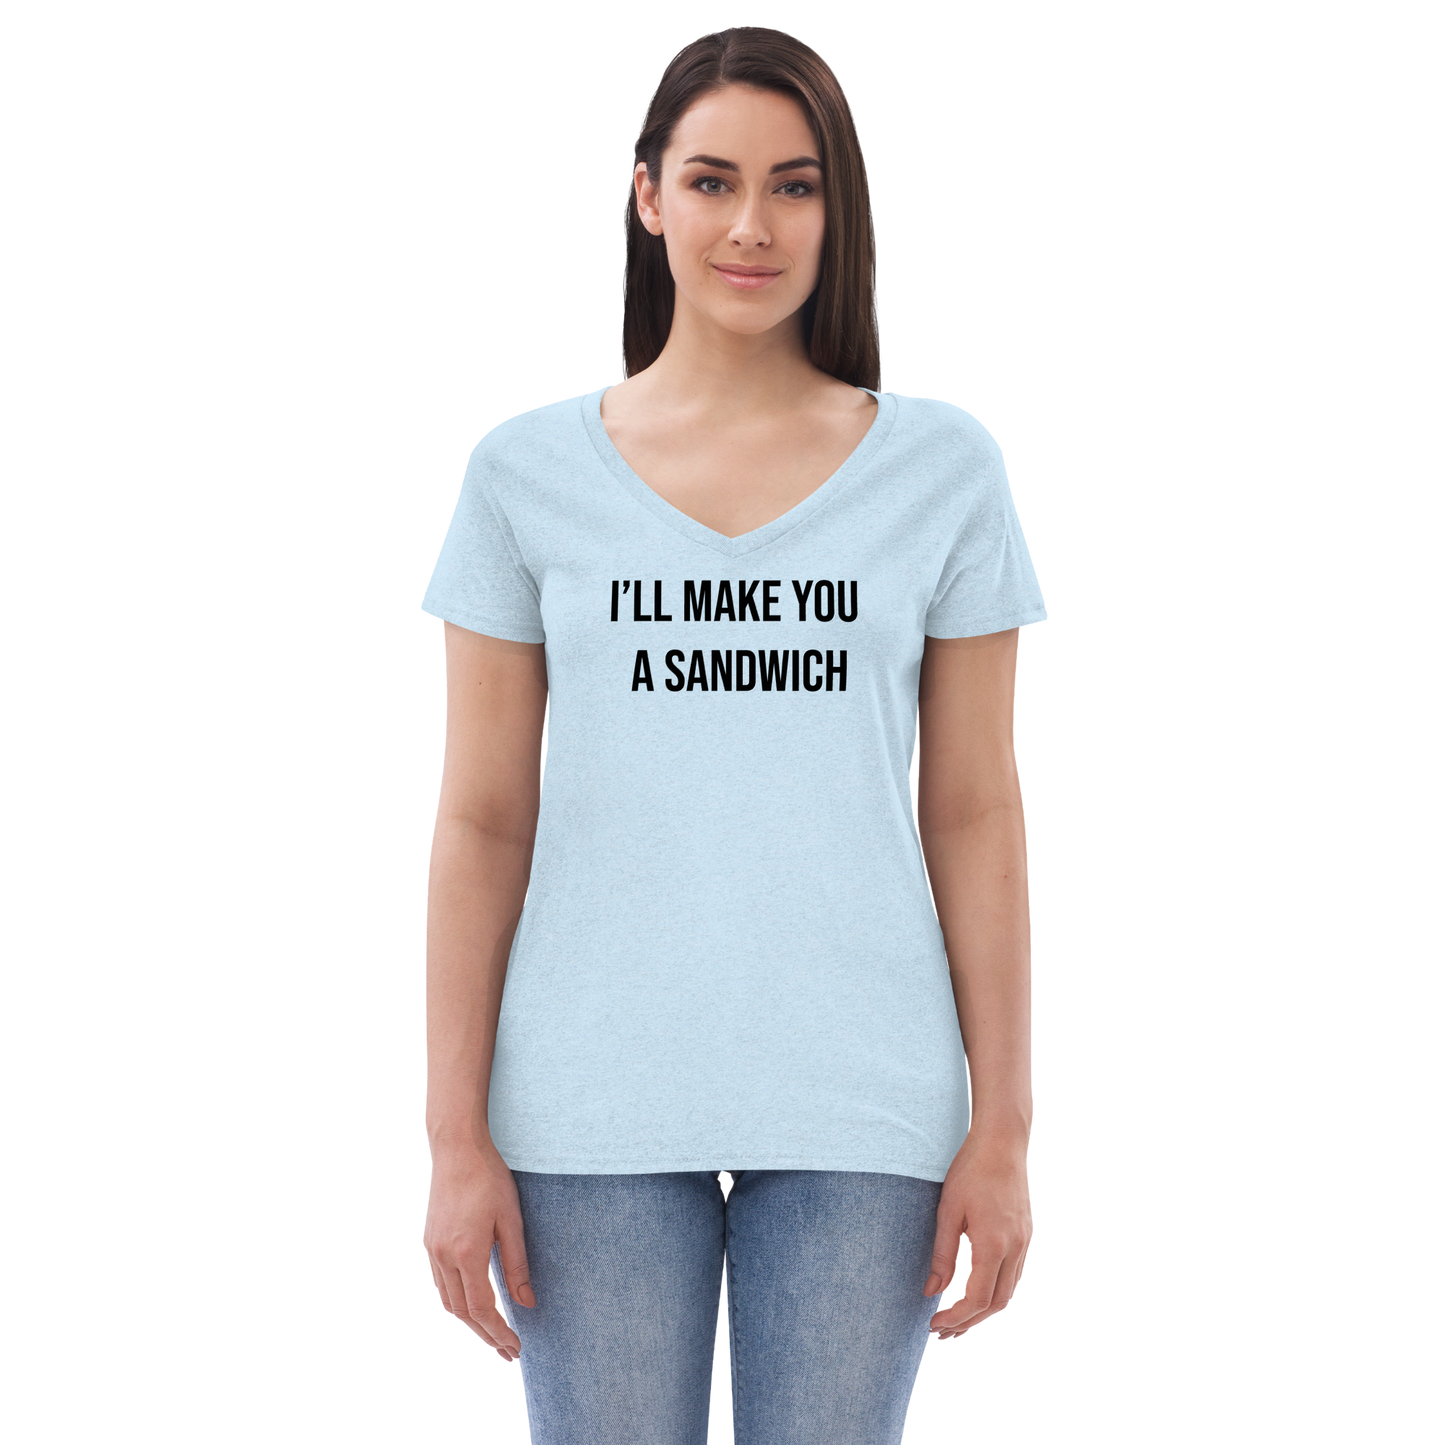 I'LL MAKE YOU A SANDWICH